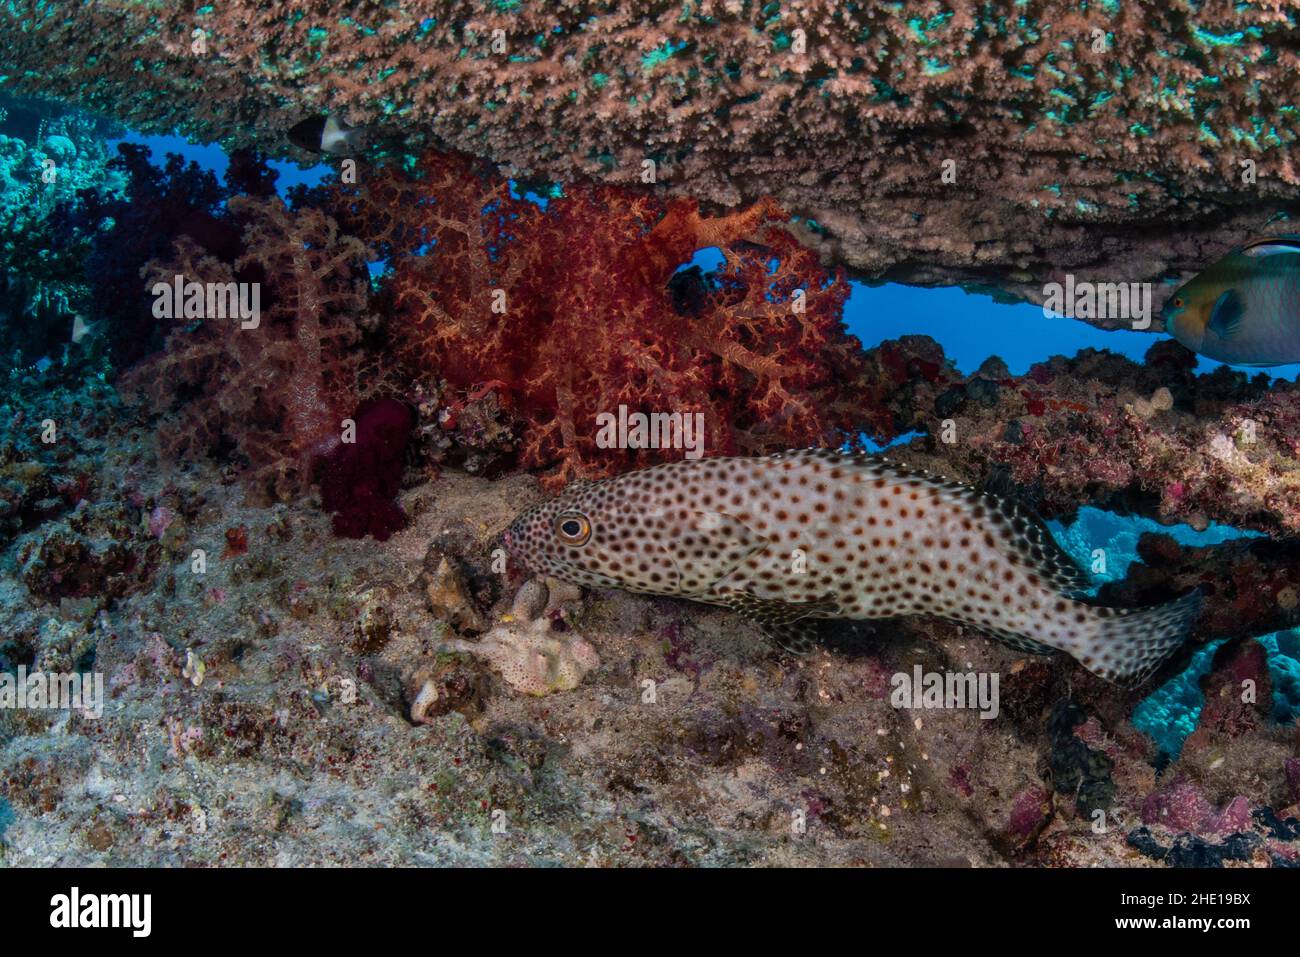 Arabian grouper (epinephelus tauvina) from the Red sea, Egypt. Stock Photo